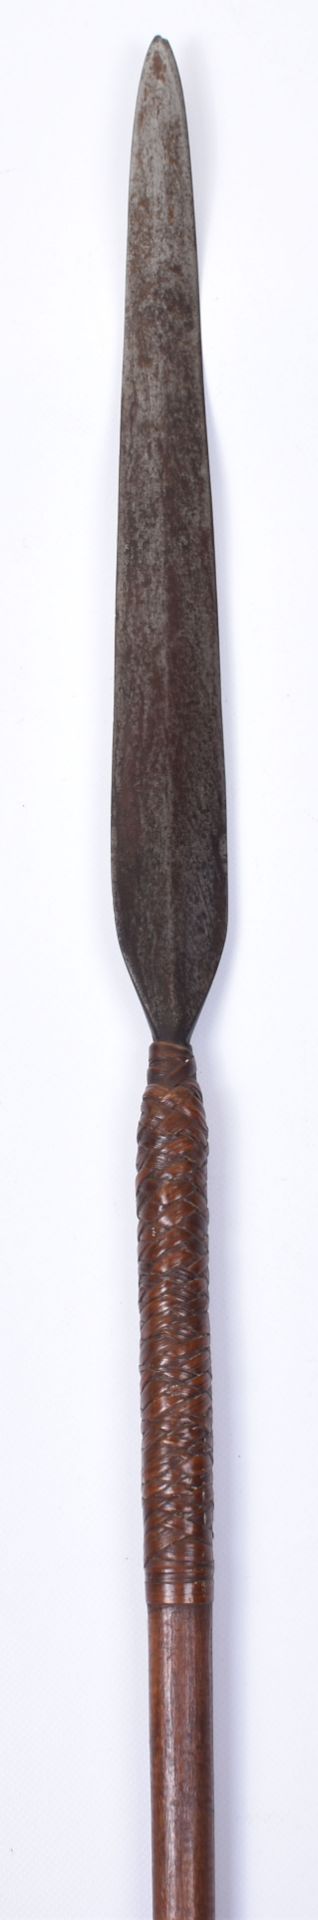 Large Early Zulu Warriors Spear “Assegai” - Image 6 of 10